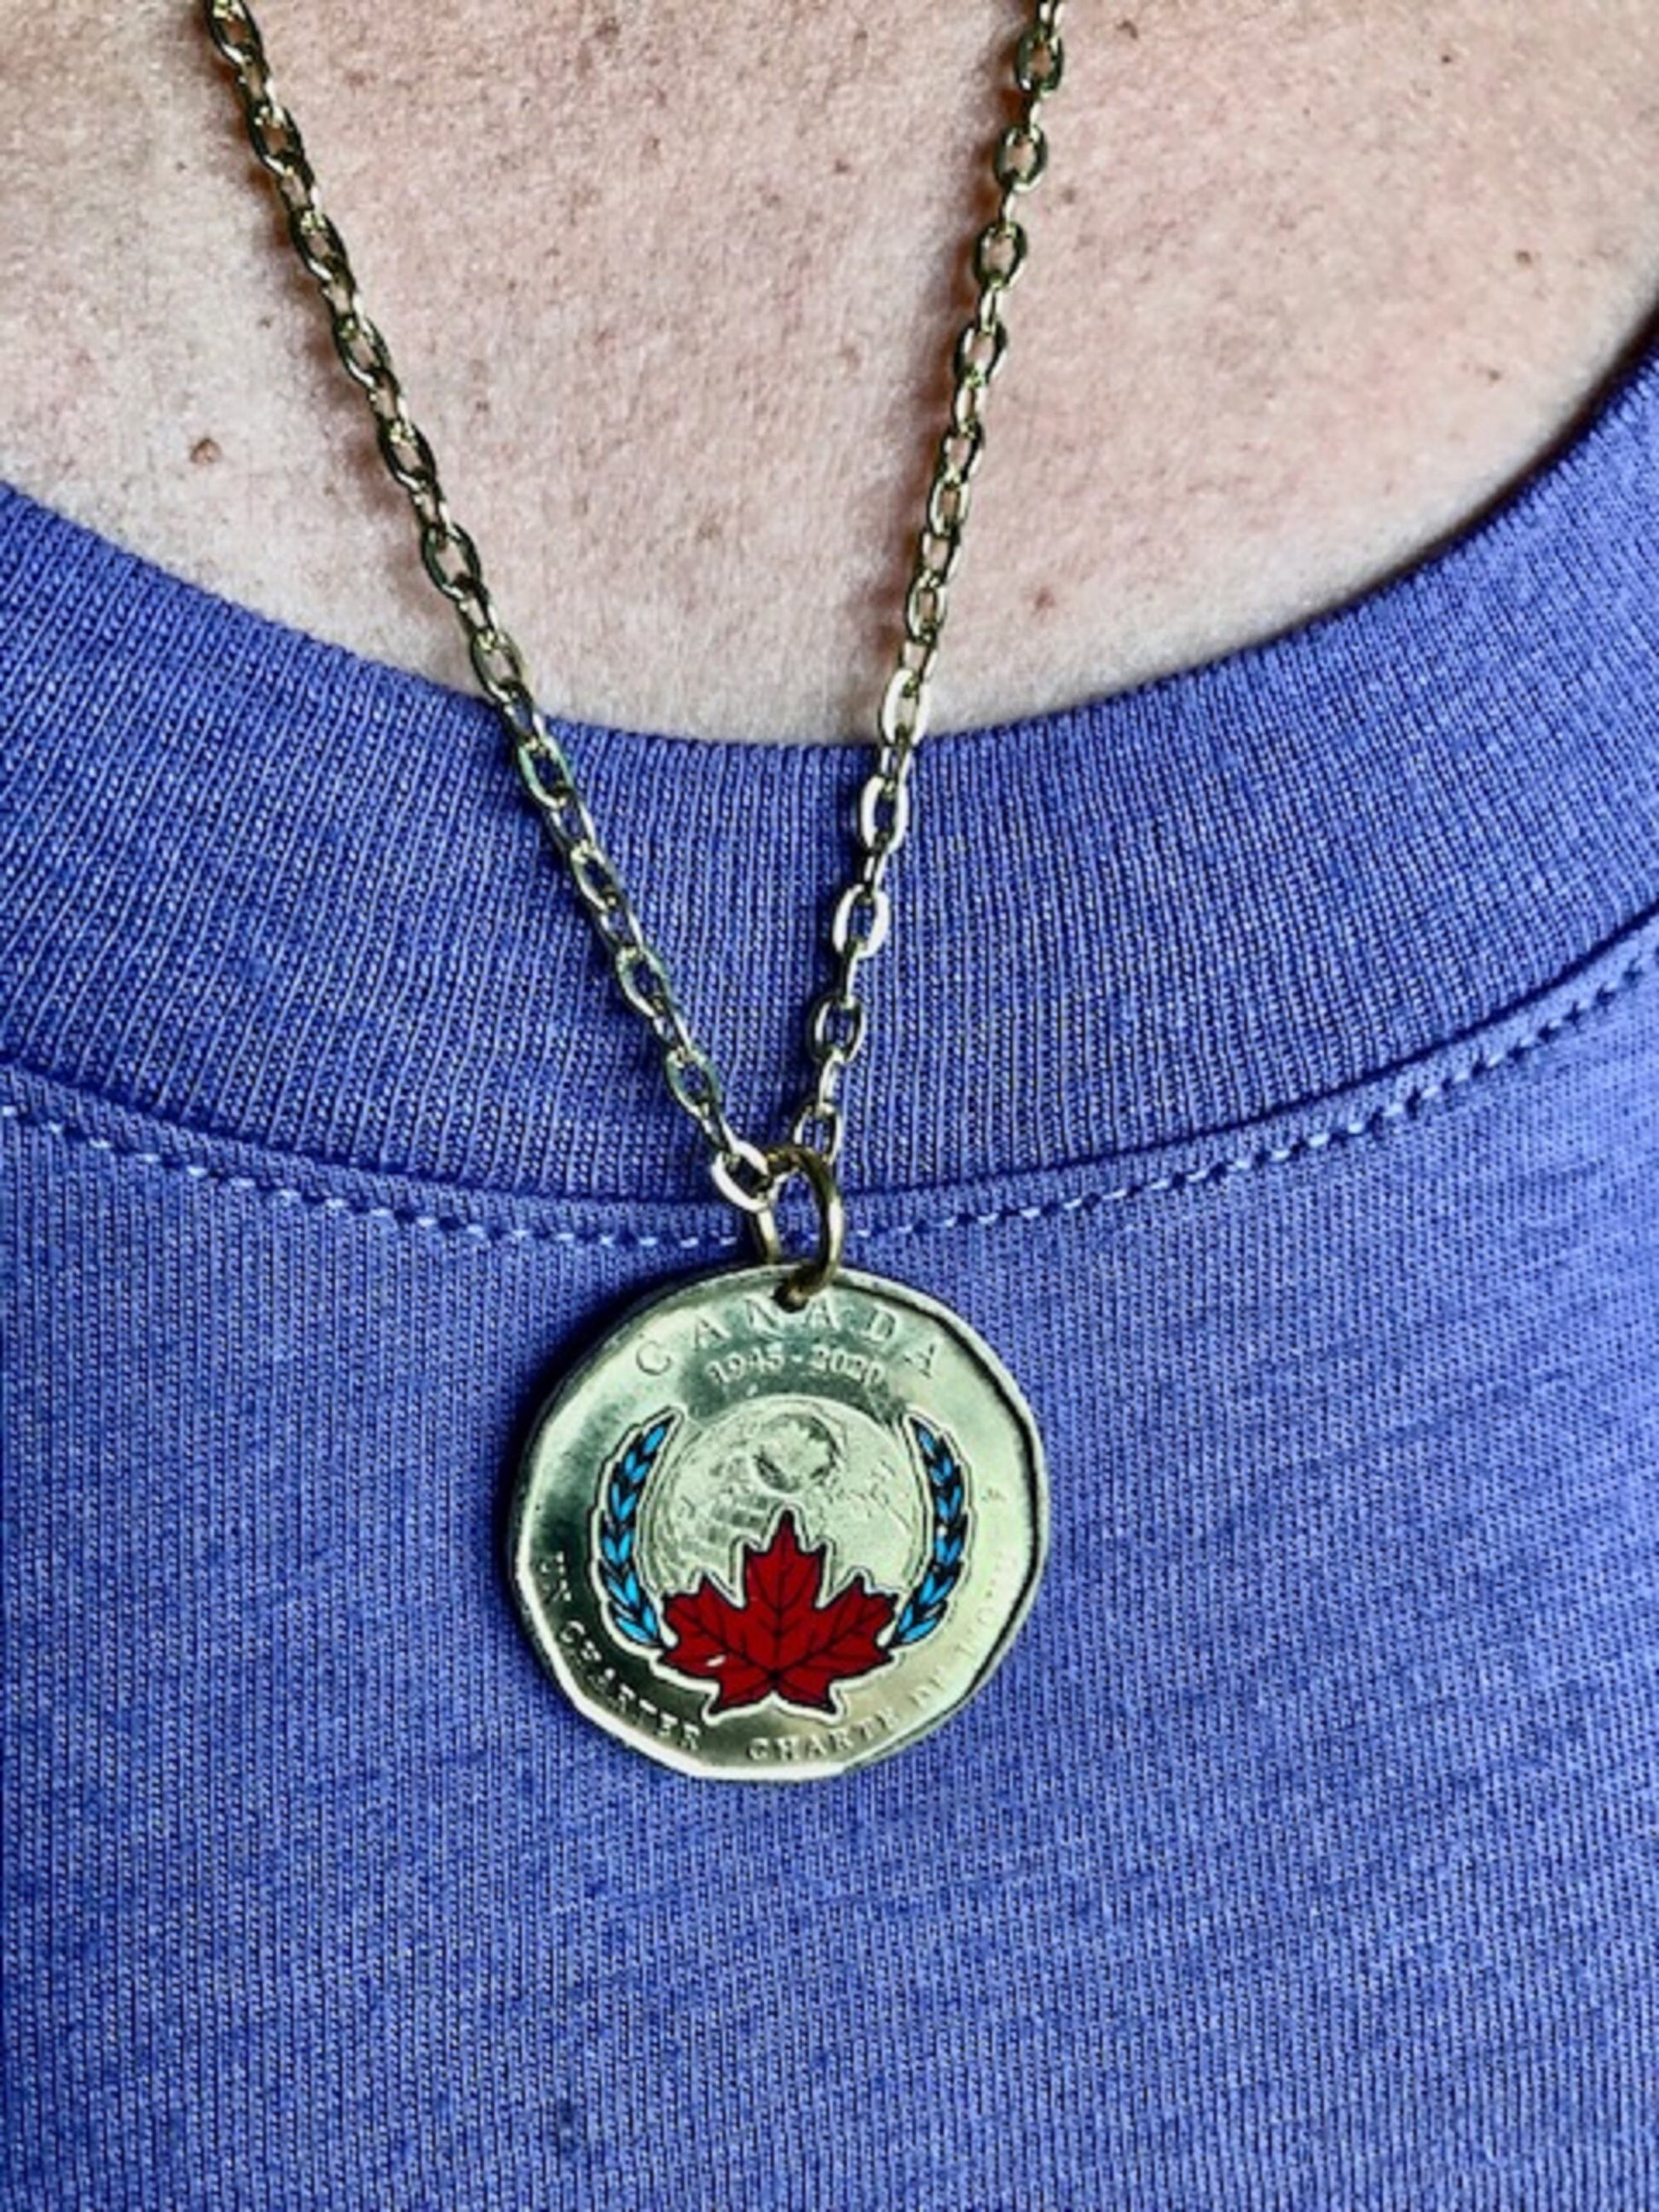 Canada Coin Necklace Pendant 2020 75th Anniversary Loon Dollar Loonie Custom Vintage Made Rare coins - Coin Enthusiast Fashion Handmade